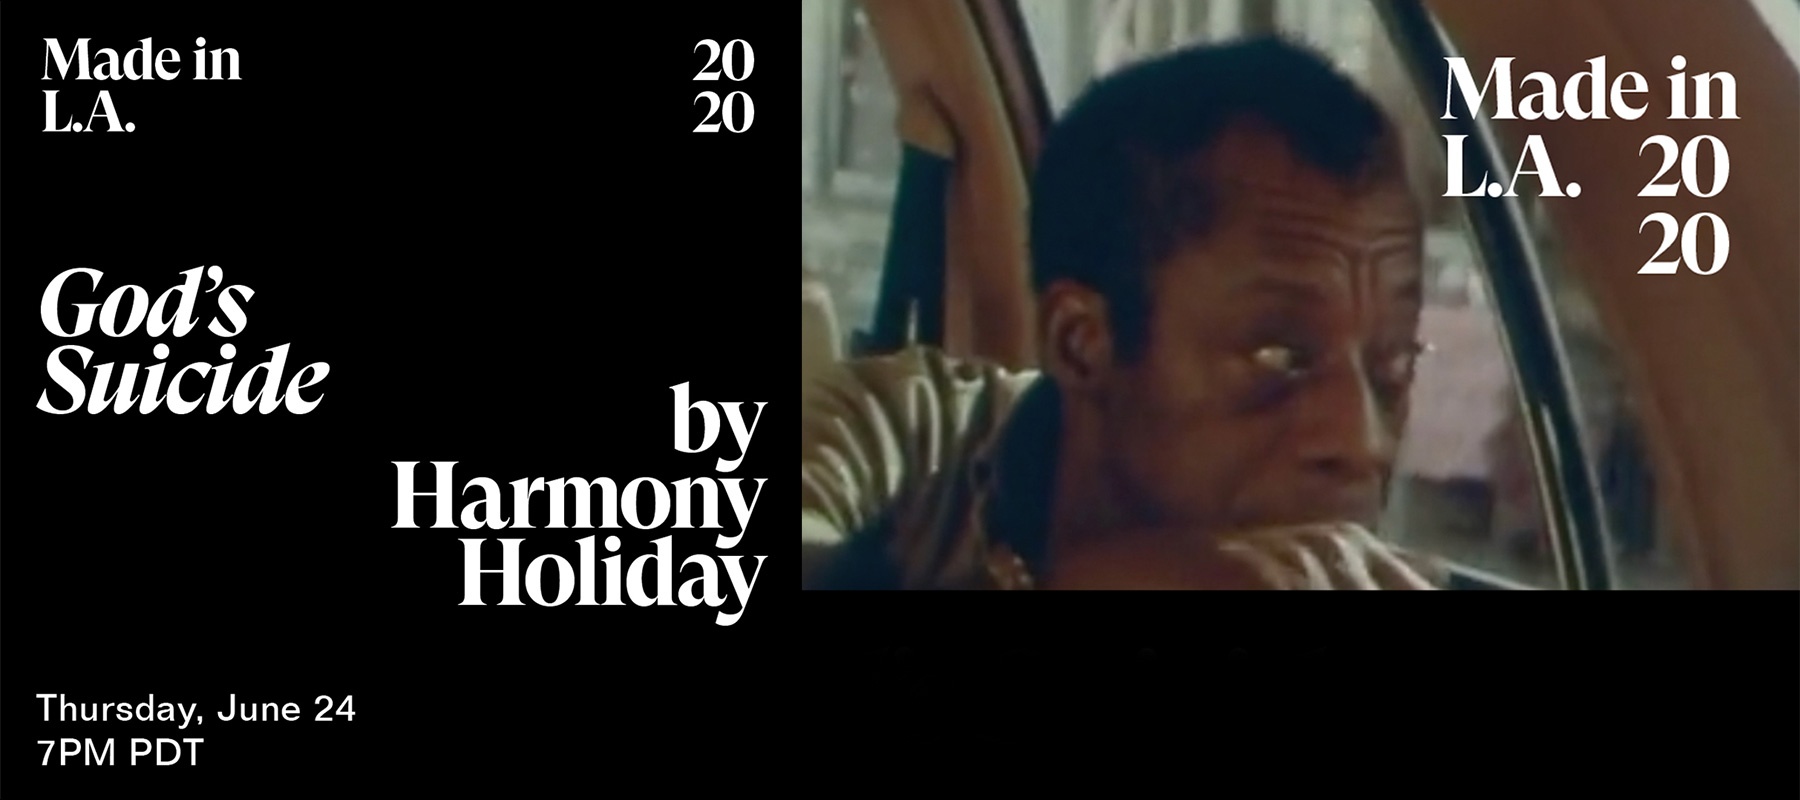 harmony-holiday-gods-suicide-rotator